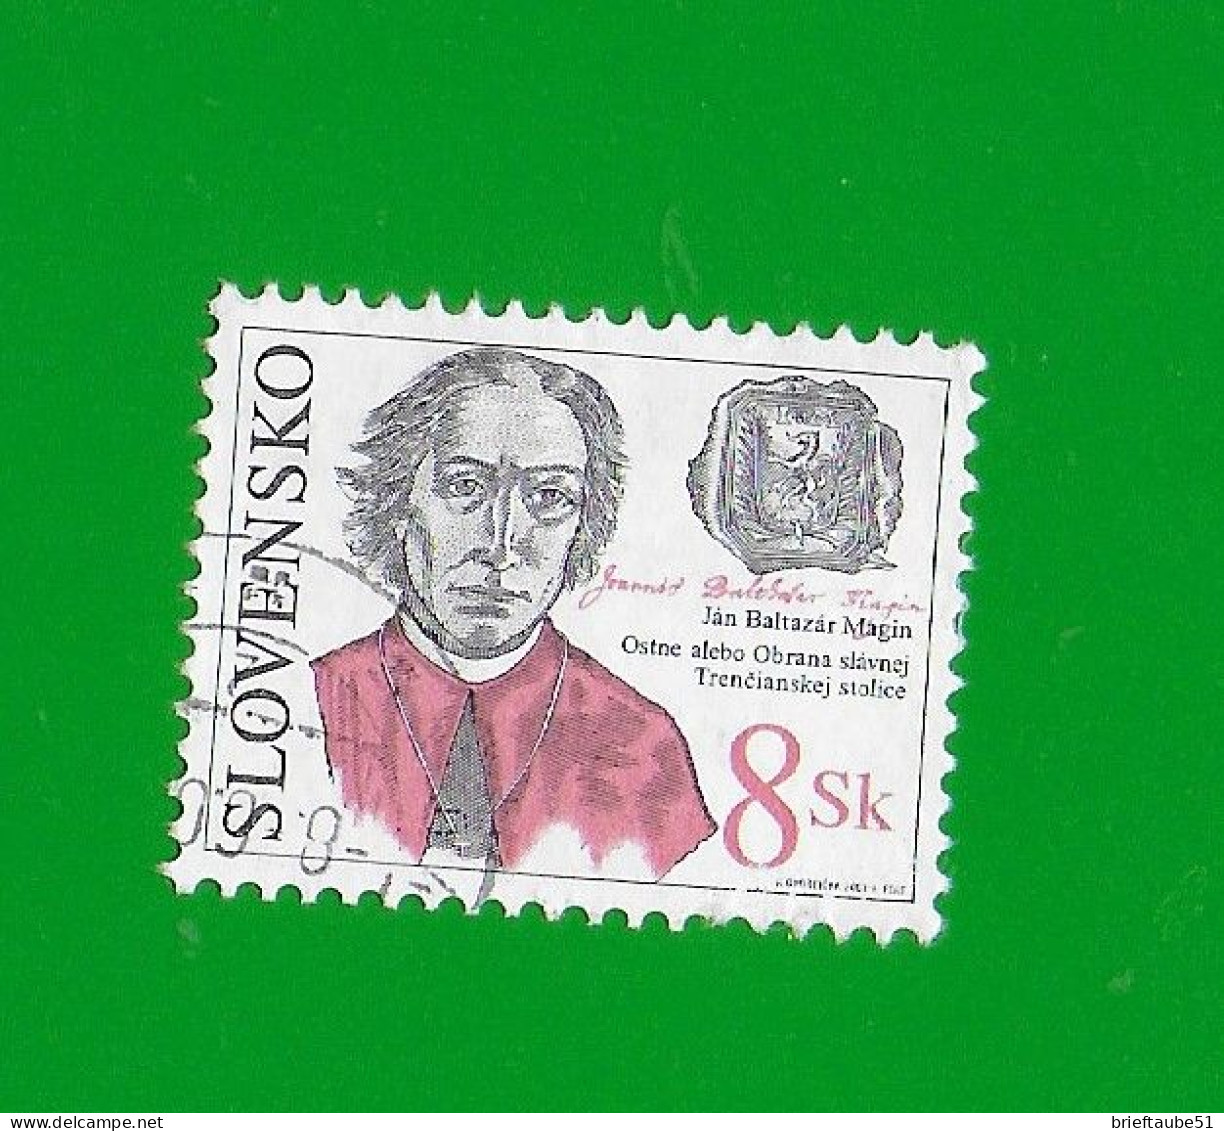 SLOVAKIA REPUBLIC 2003 Gestempelt°Used/Bedarf  MiNr. 467  #  "RELIGION  #  PRIESTER  Jan B. Magin " - Used Stamps